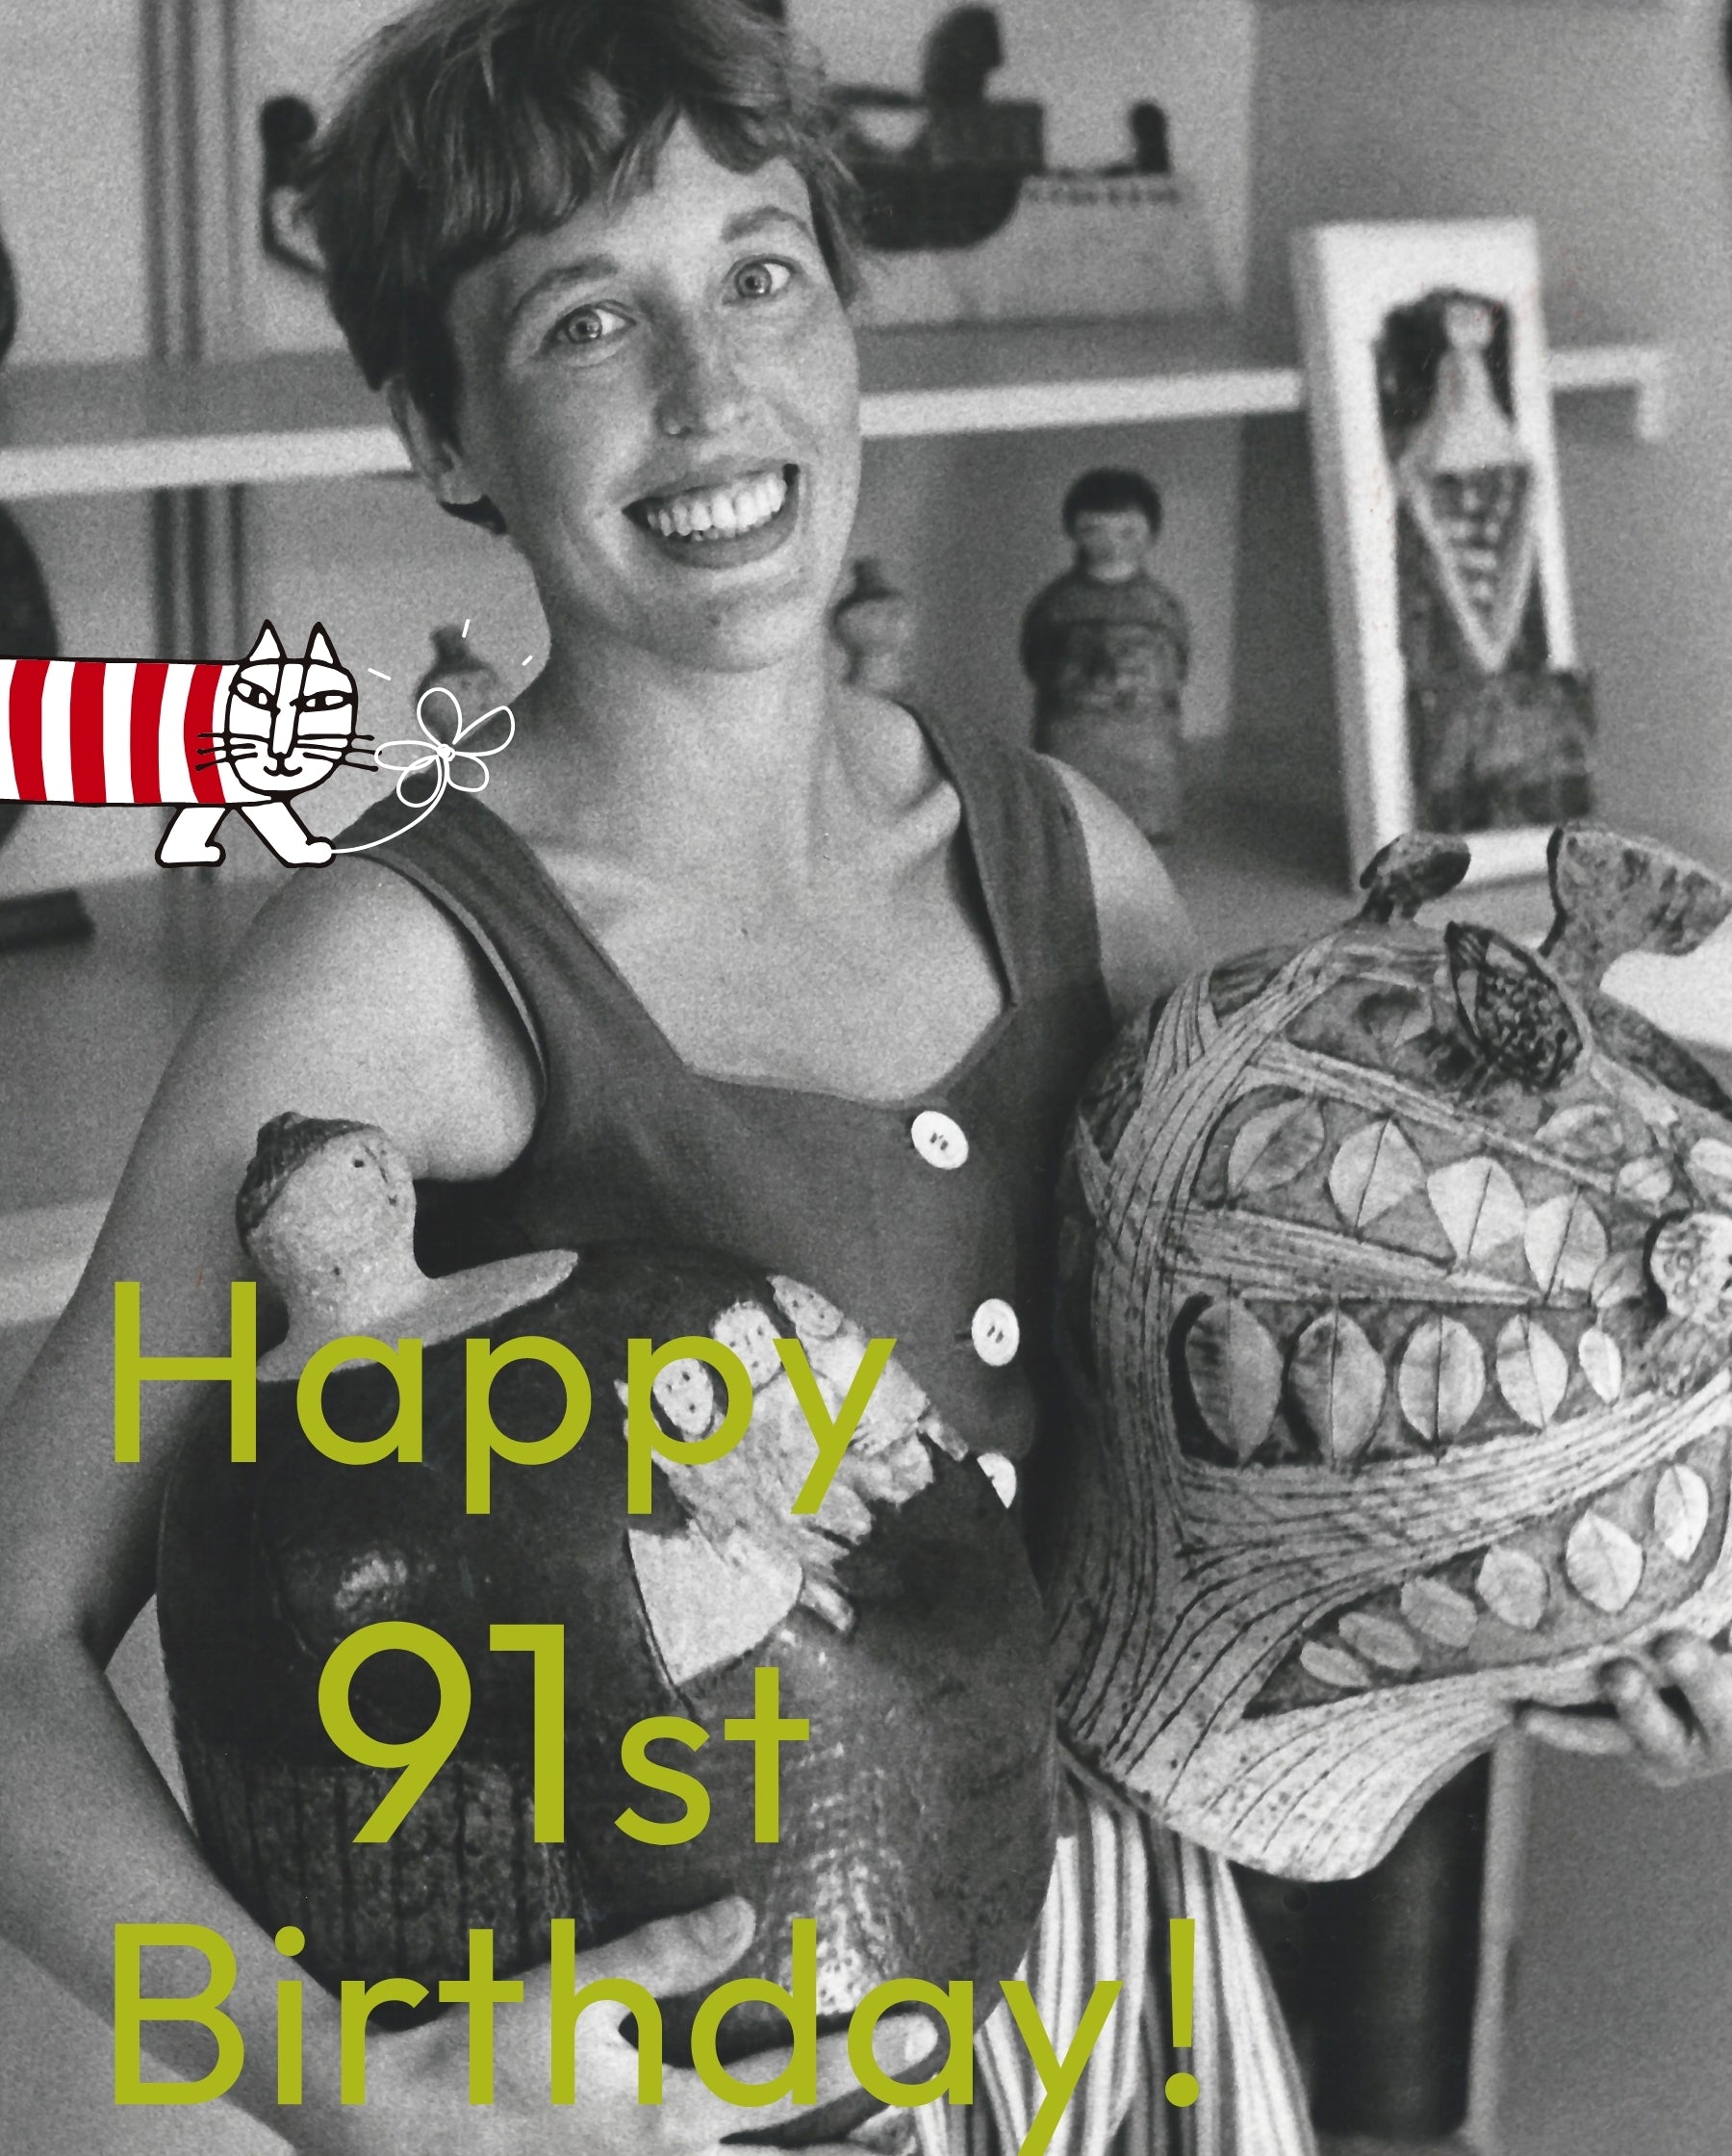 HAPPY BIRTHDAY LISA 91TH !!